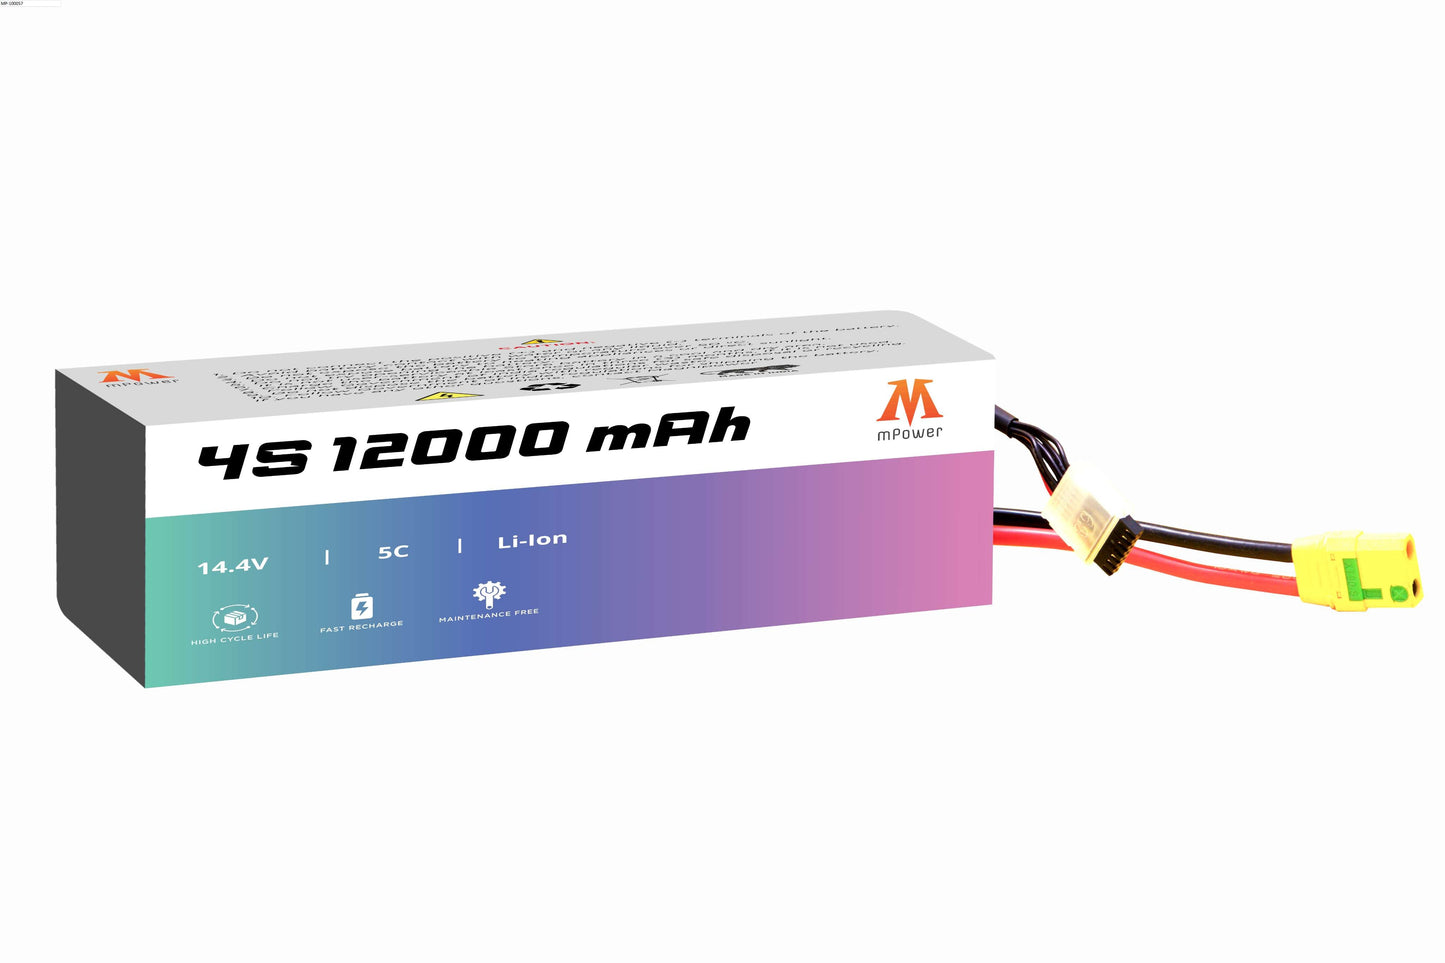 mPower 4S 12000mAh Lithium-Ion Battery for Surveillance Drones-mpowerlithium